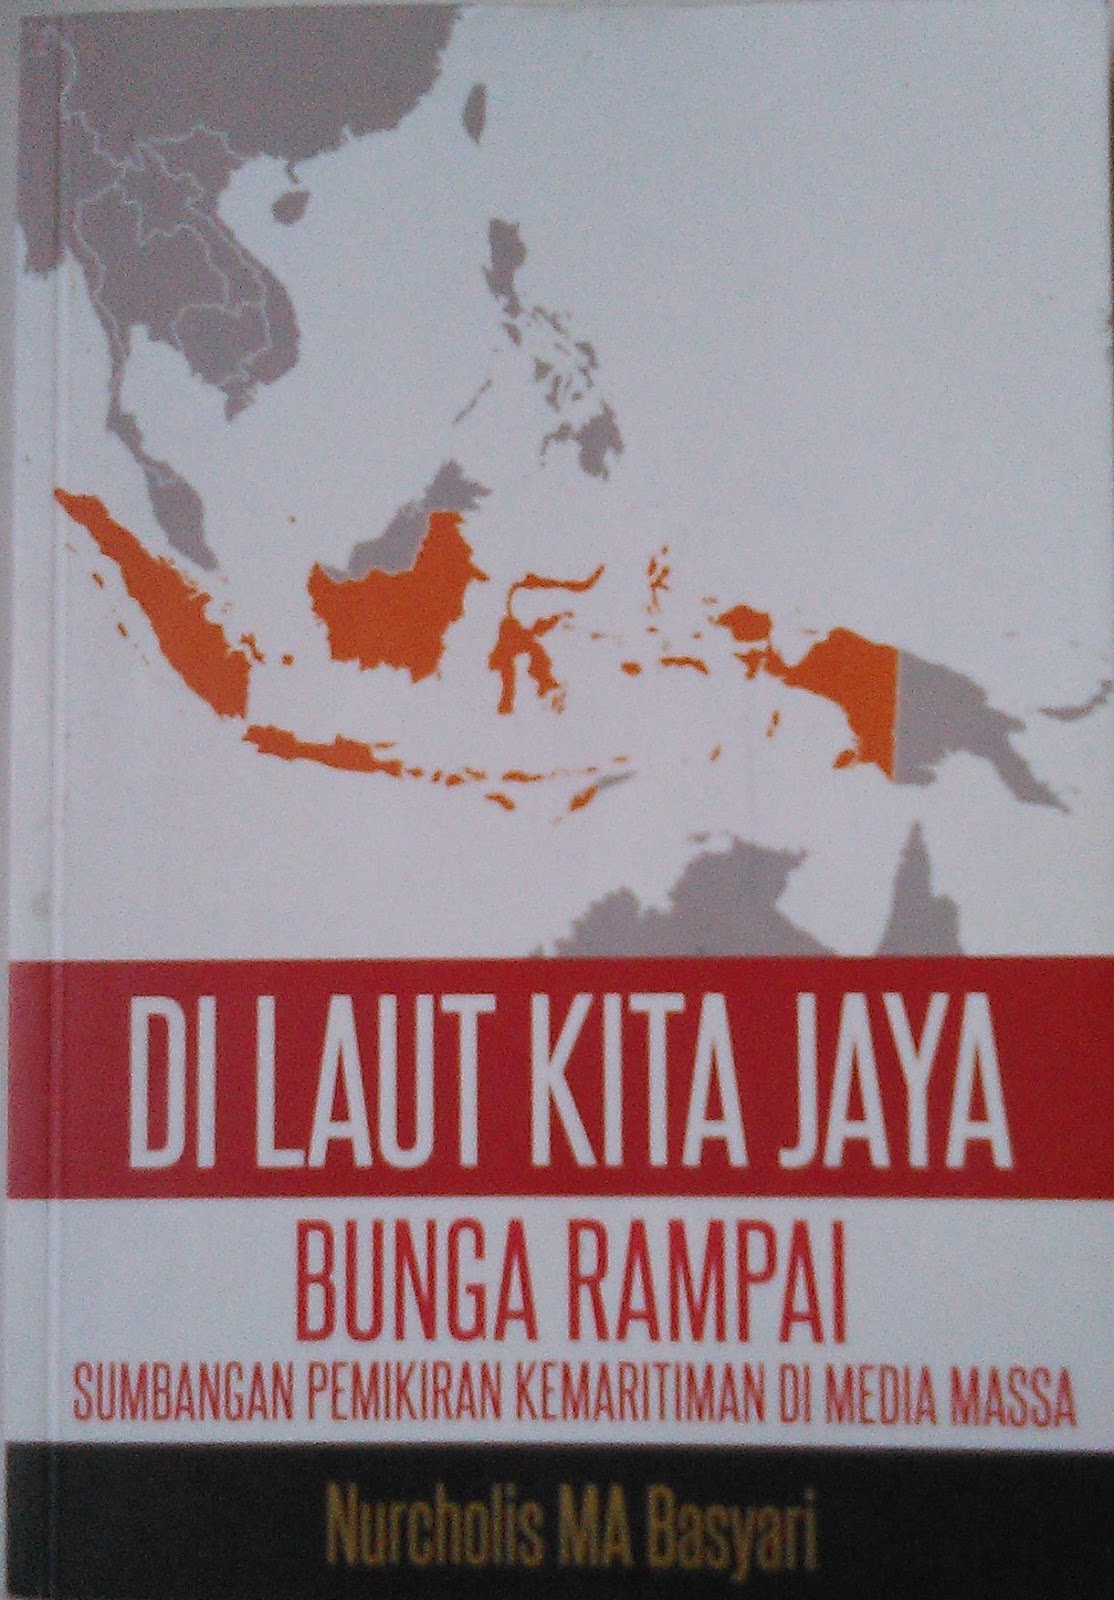 RESENSI BUKU "DI LAUT INDONESIA INGIN JAYA" LPM MISSI jpg (1114x1600)